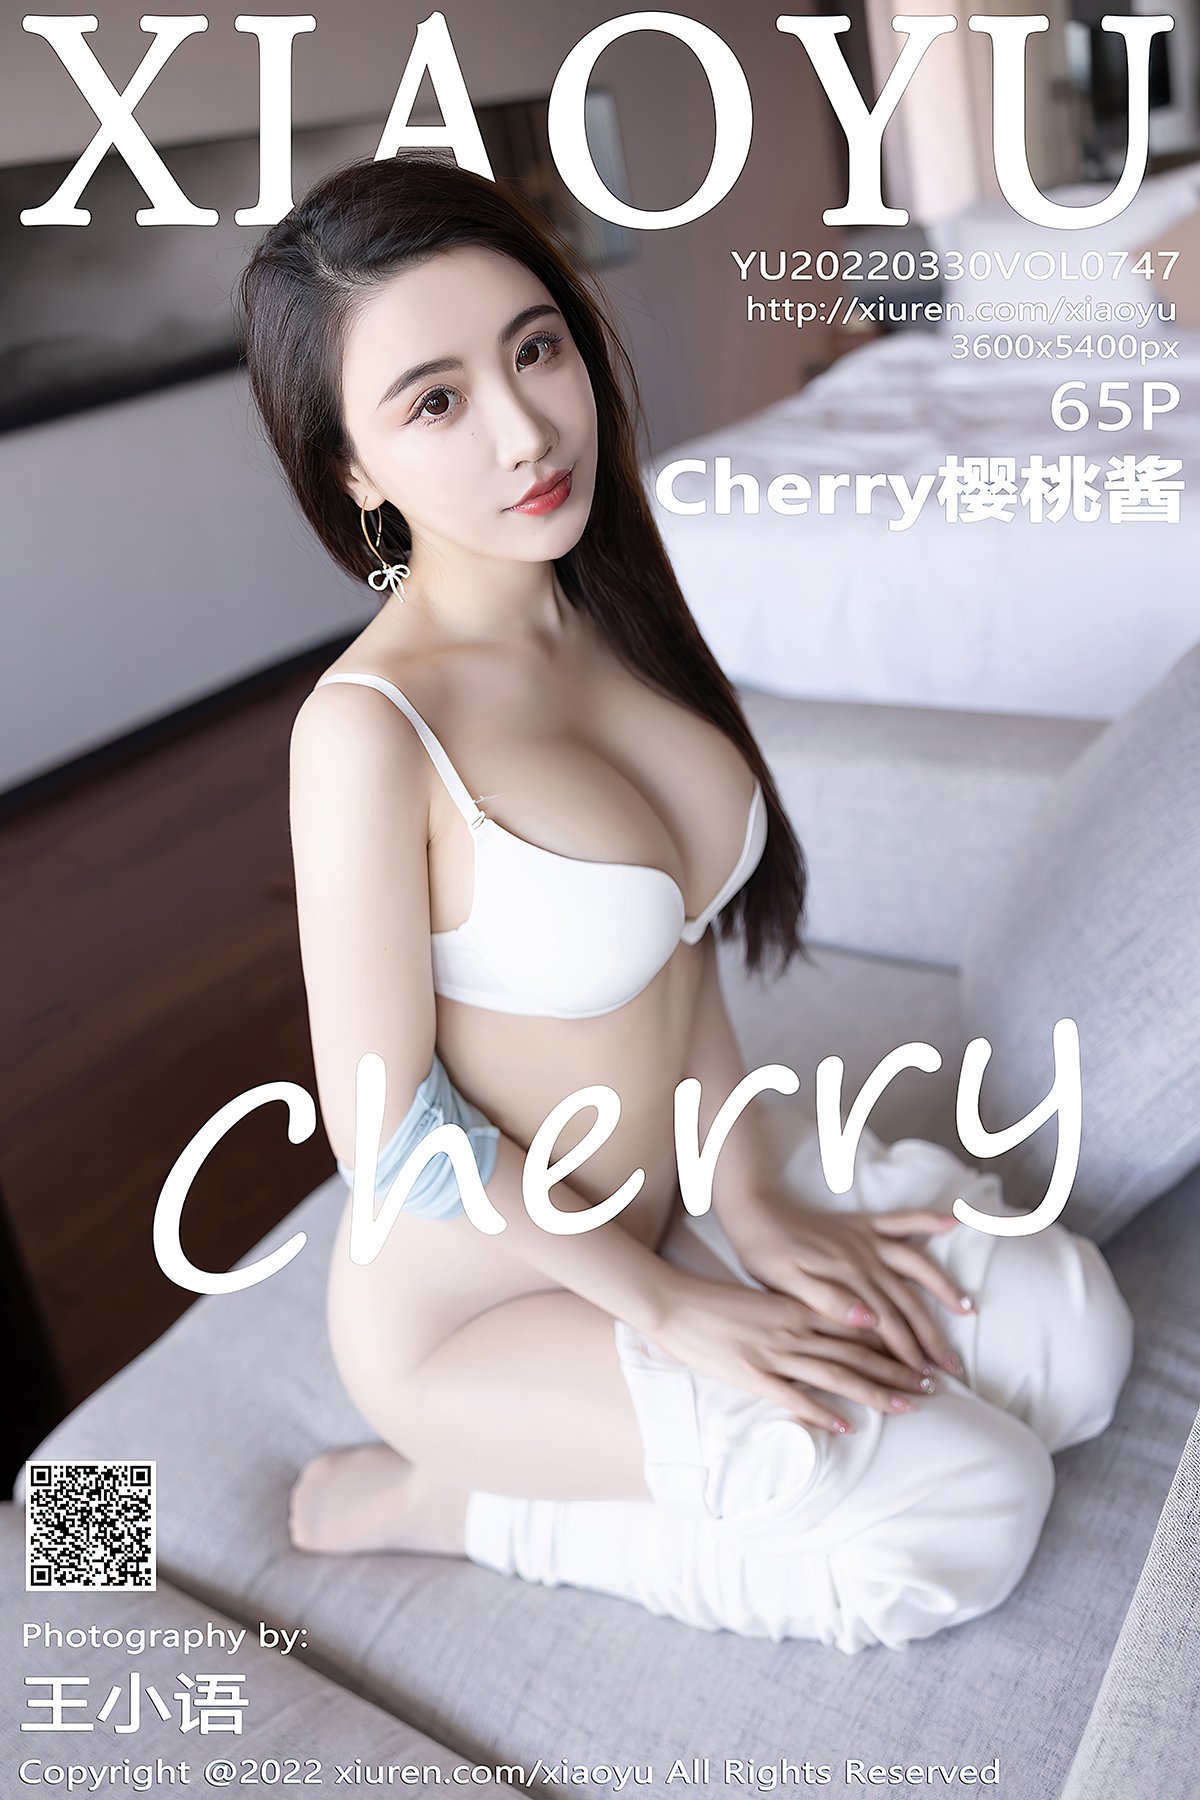 XiaoYu语画界 Vol 747 Cherry樱桃酱 000 9699567237.jpg